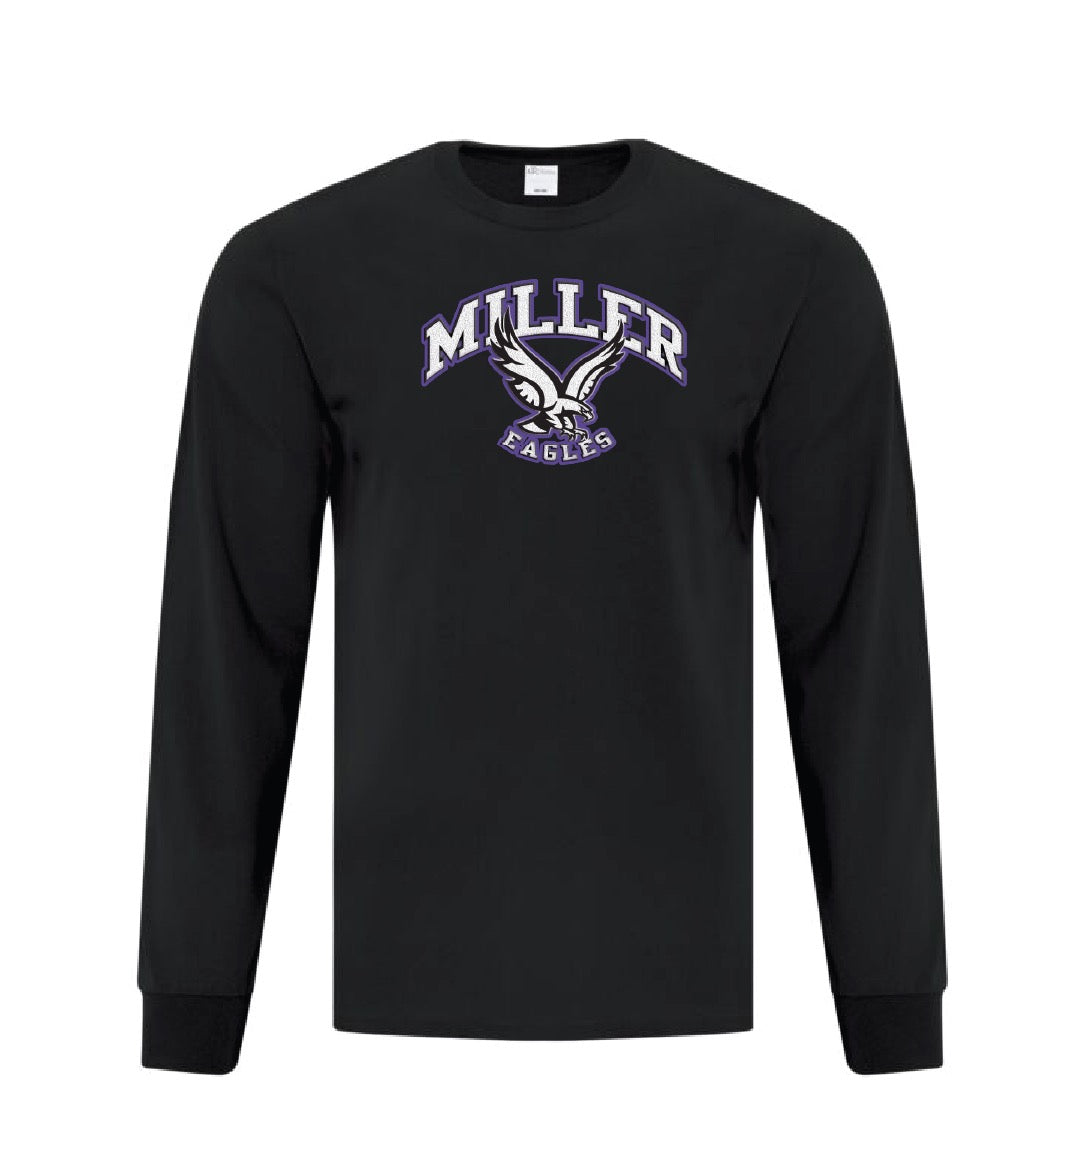 Youth "Miller Spirit Wear" Long Sleeve